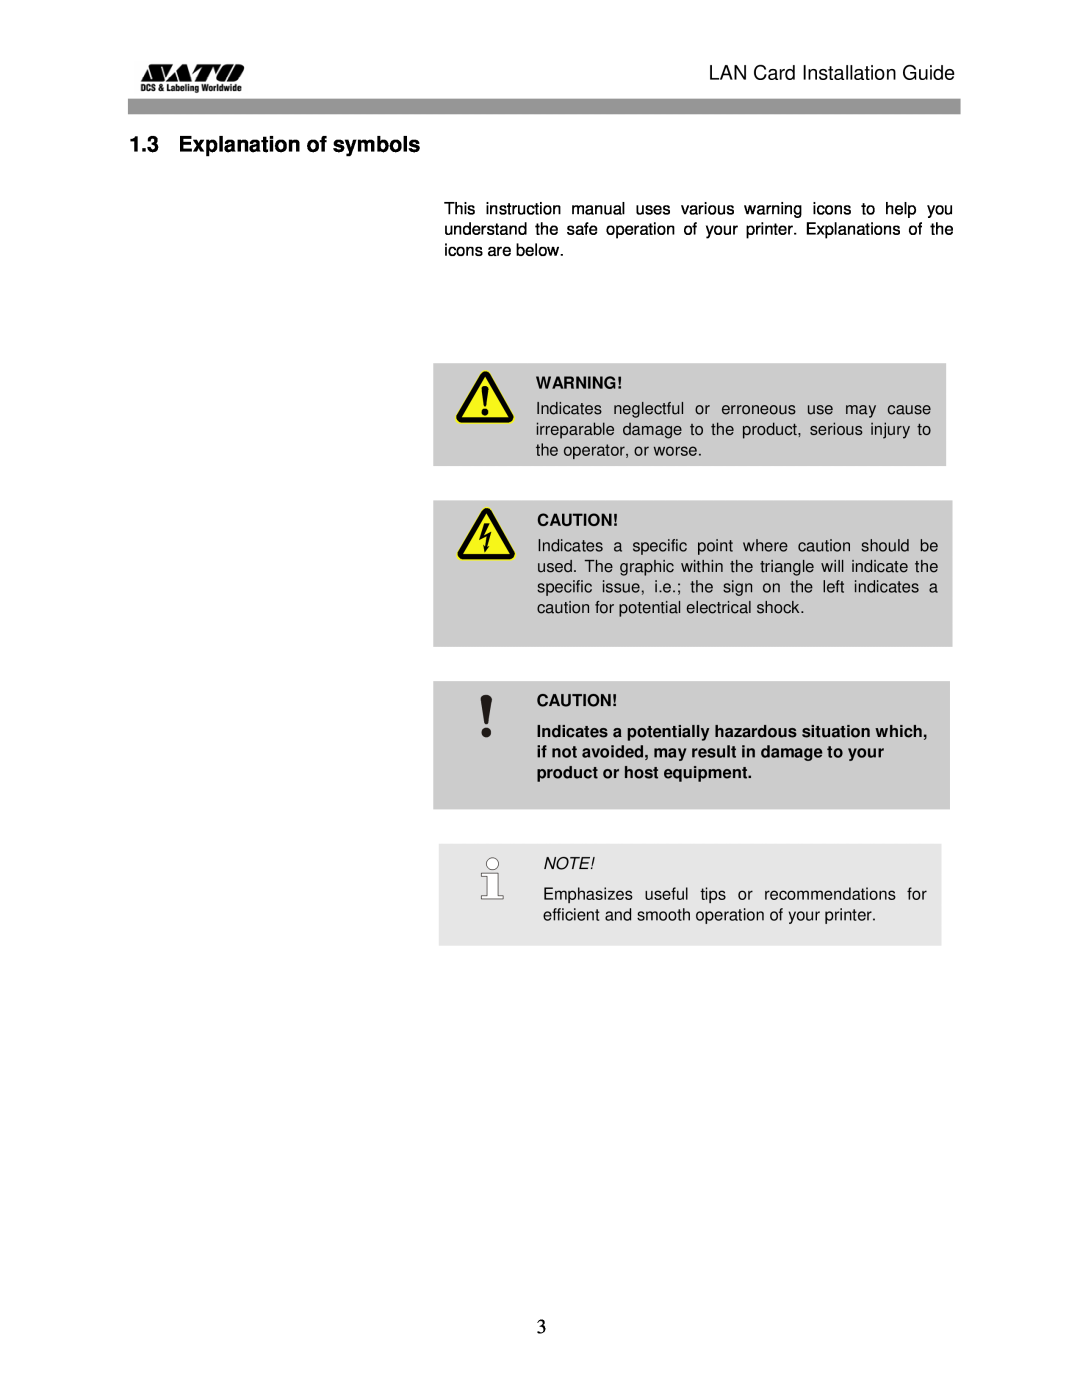 SATO GL 4xxe Series manual Explanation of symbols, LAN Card Installation Guide 